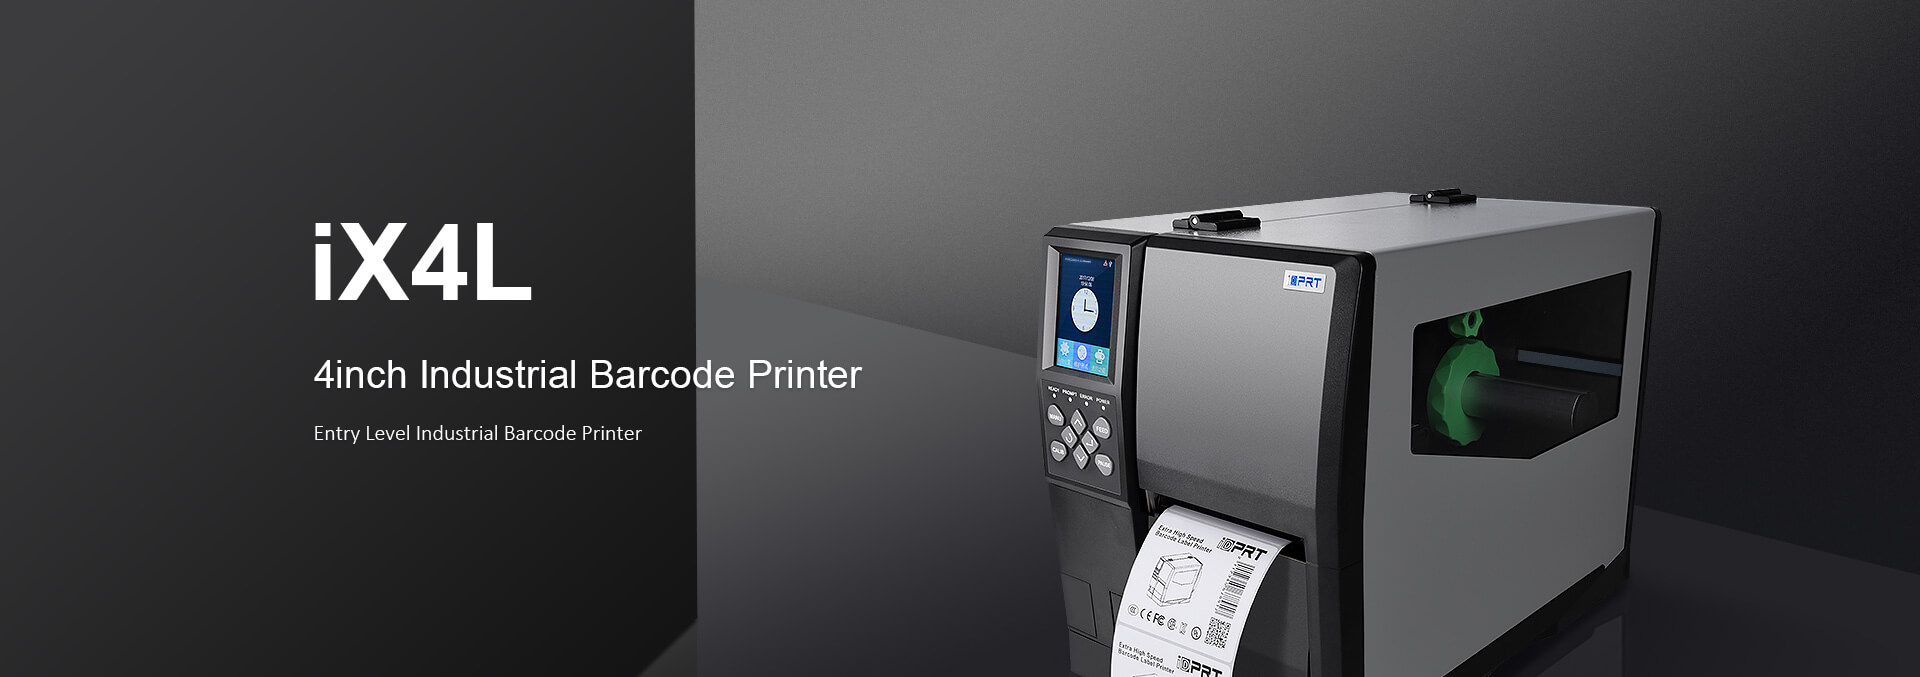 entry-level industrial barcode printer.jpg